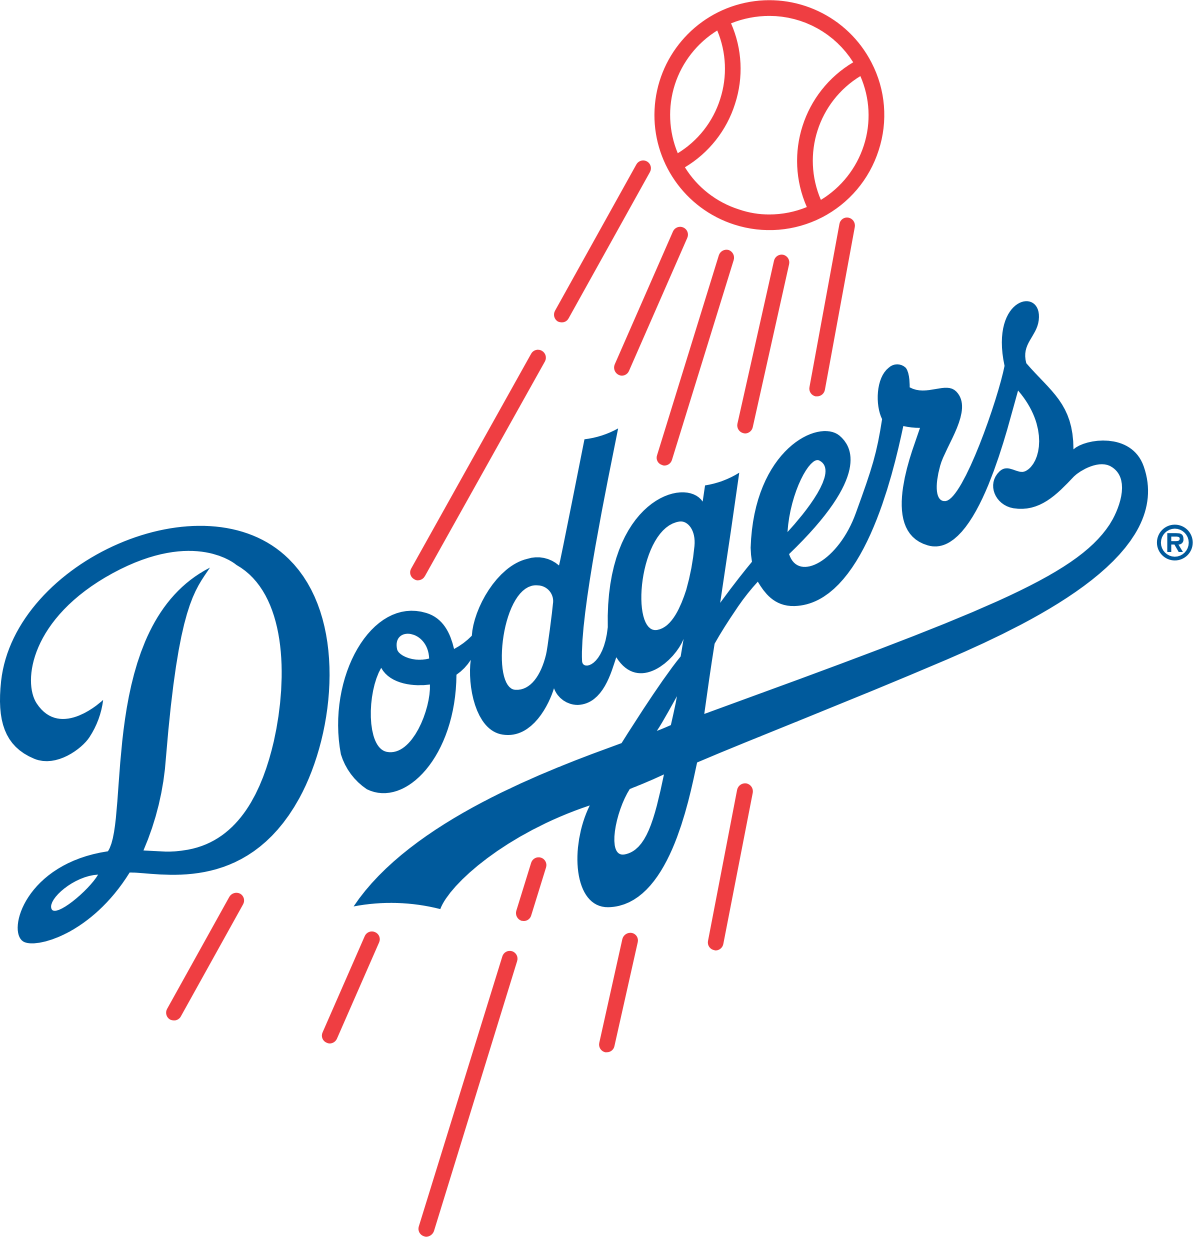 Los Angeles Dodgers Wikipedia